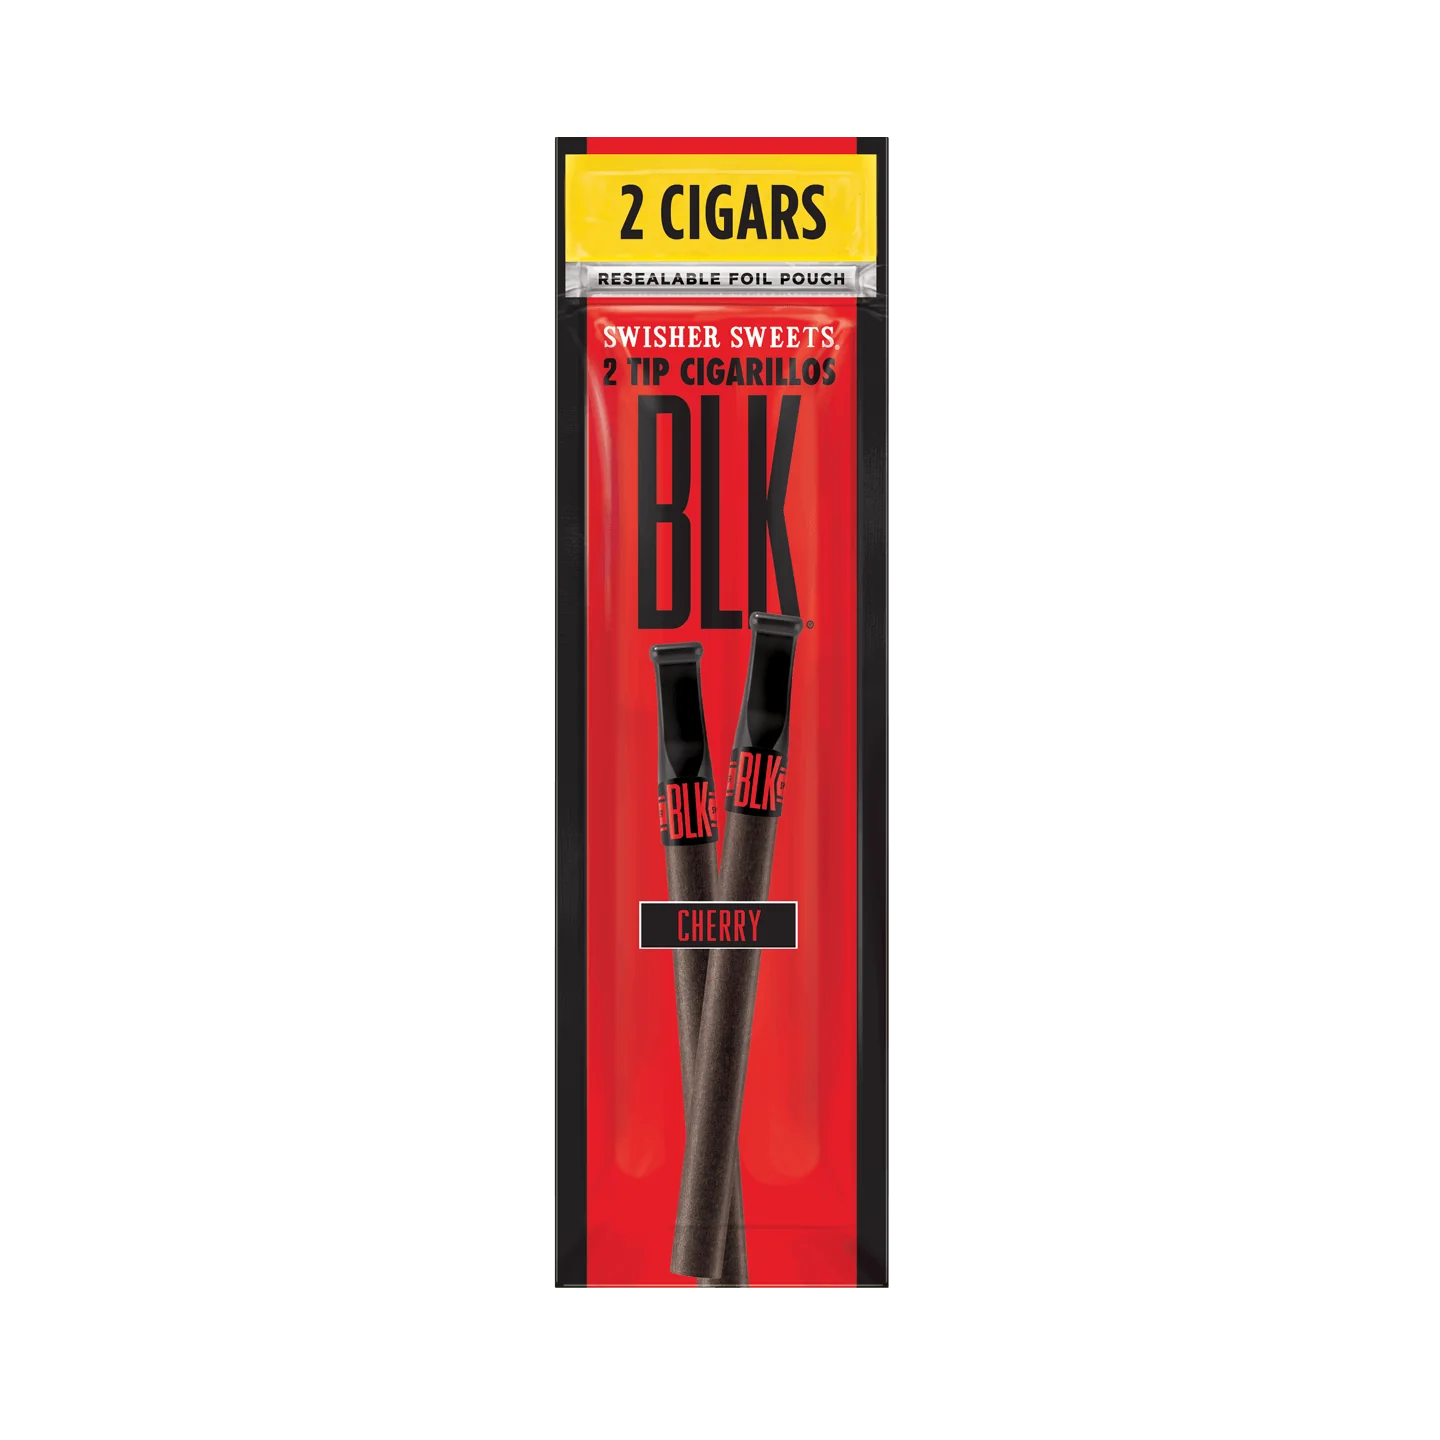 Swisher Sweet Cigarillos 2CT BLK Cherry $1.29